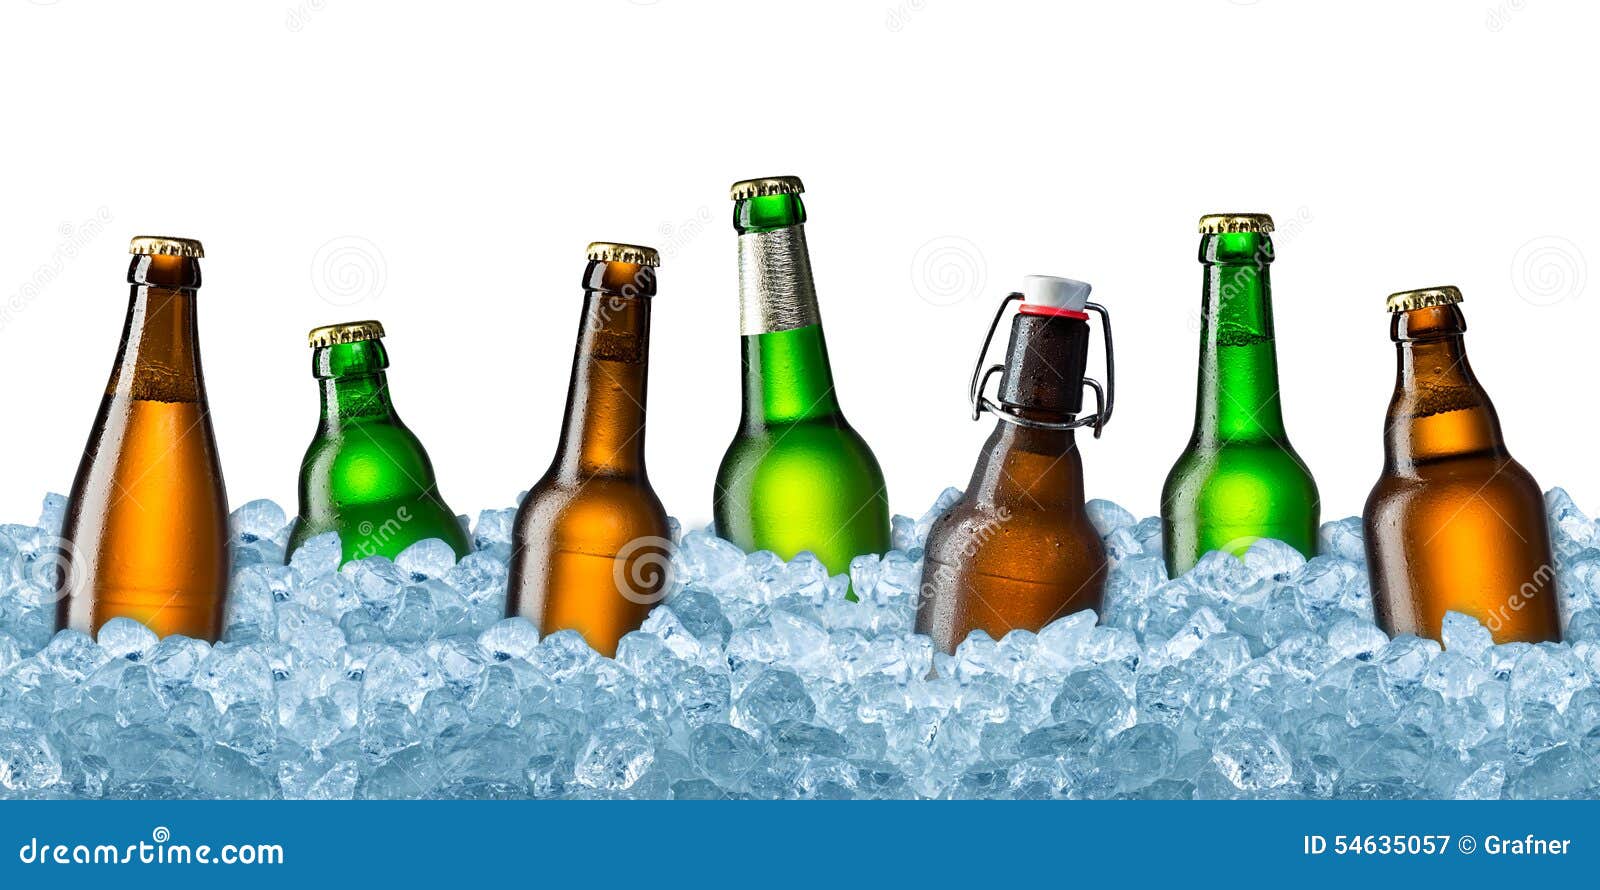 beer bottles on ice